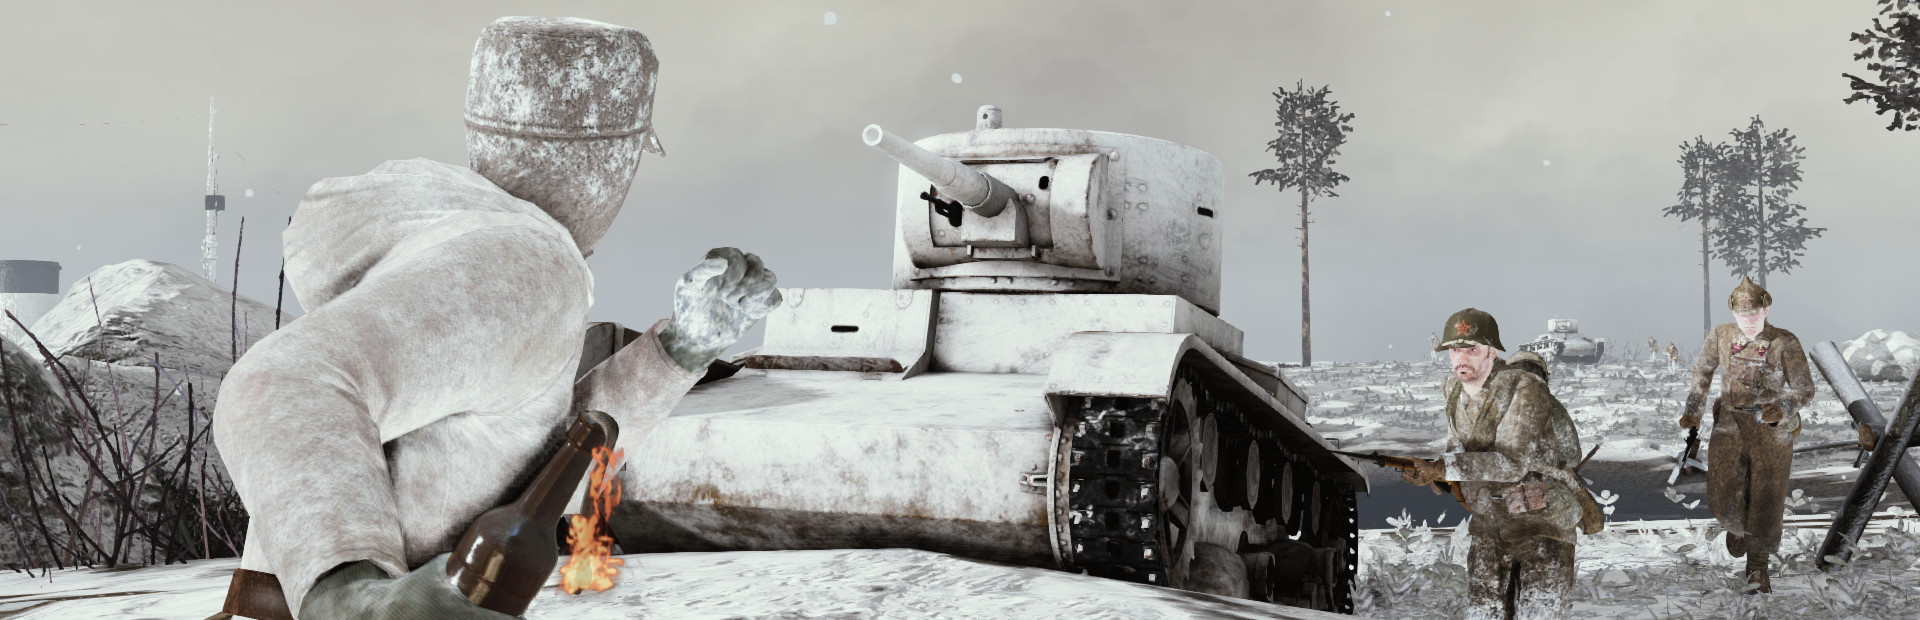 Talvisota - Winter War cover image